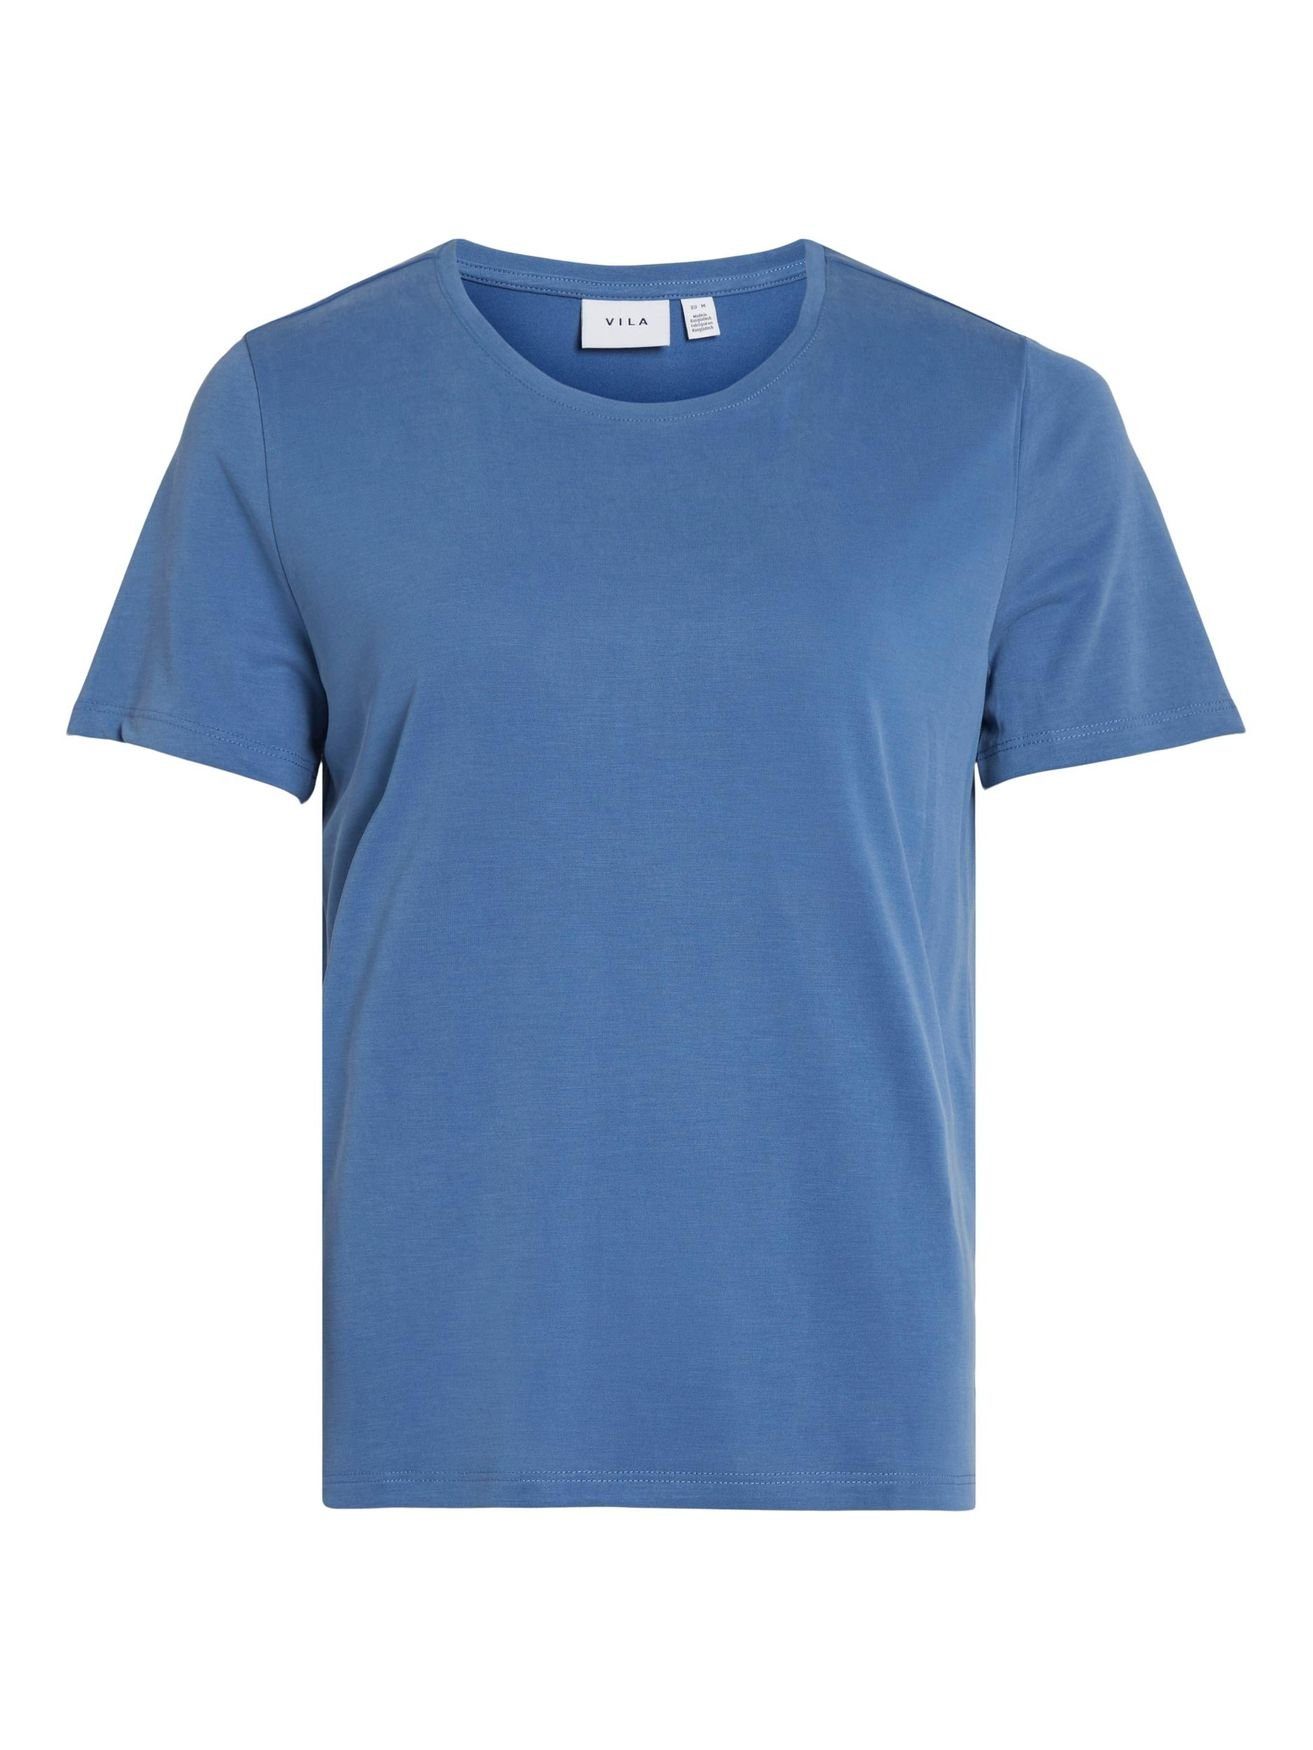 T-Shirt Blau Top T-Shirt Vila Oberteil Basic in Rundhals VIMODALA Kurzarm 4870